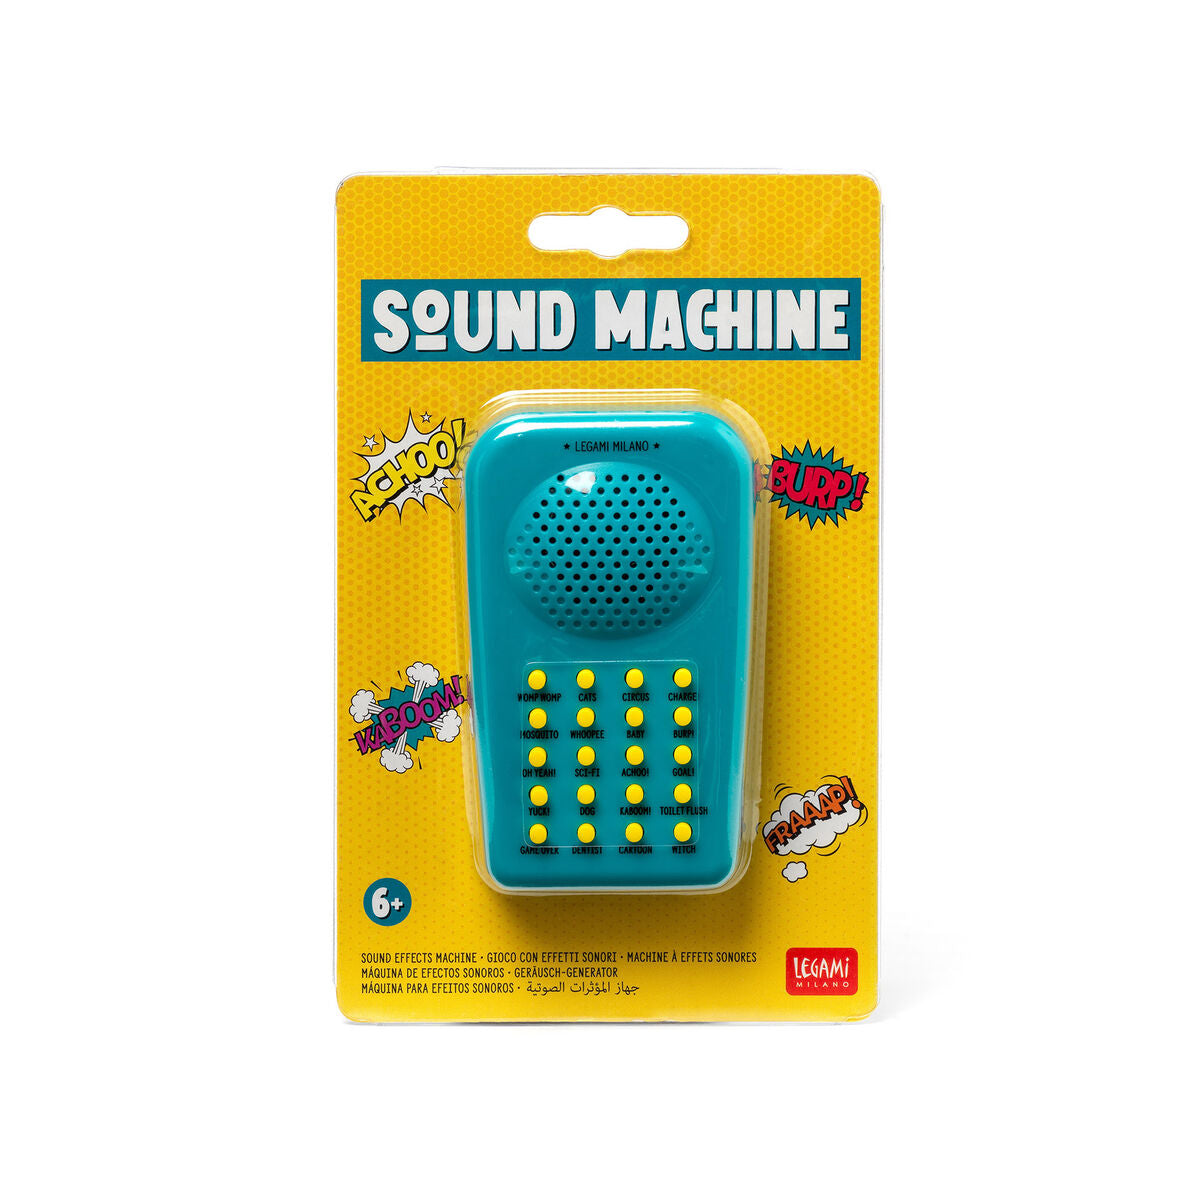 Legami Sound Machine with fun sound effects Aqua by Weirs of Baggot St